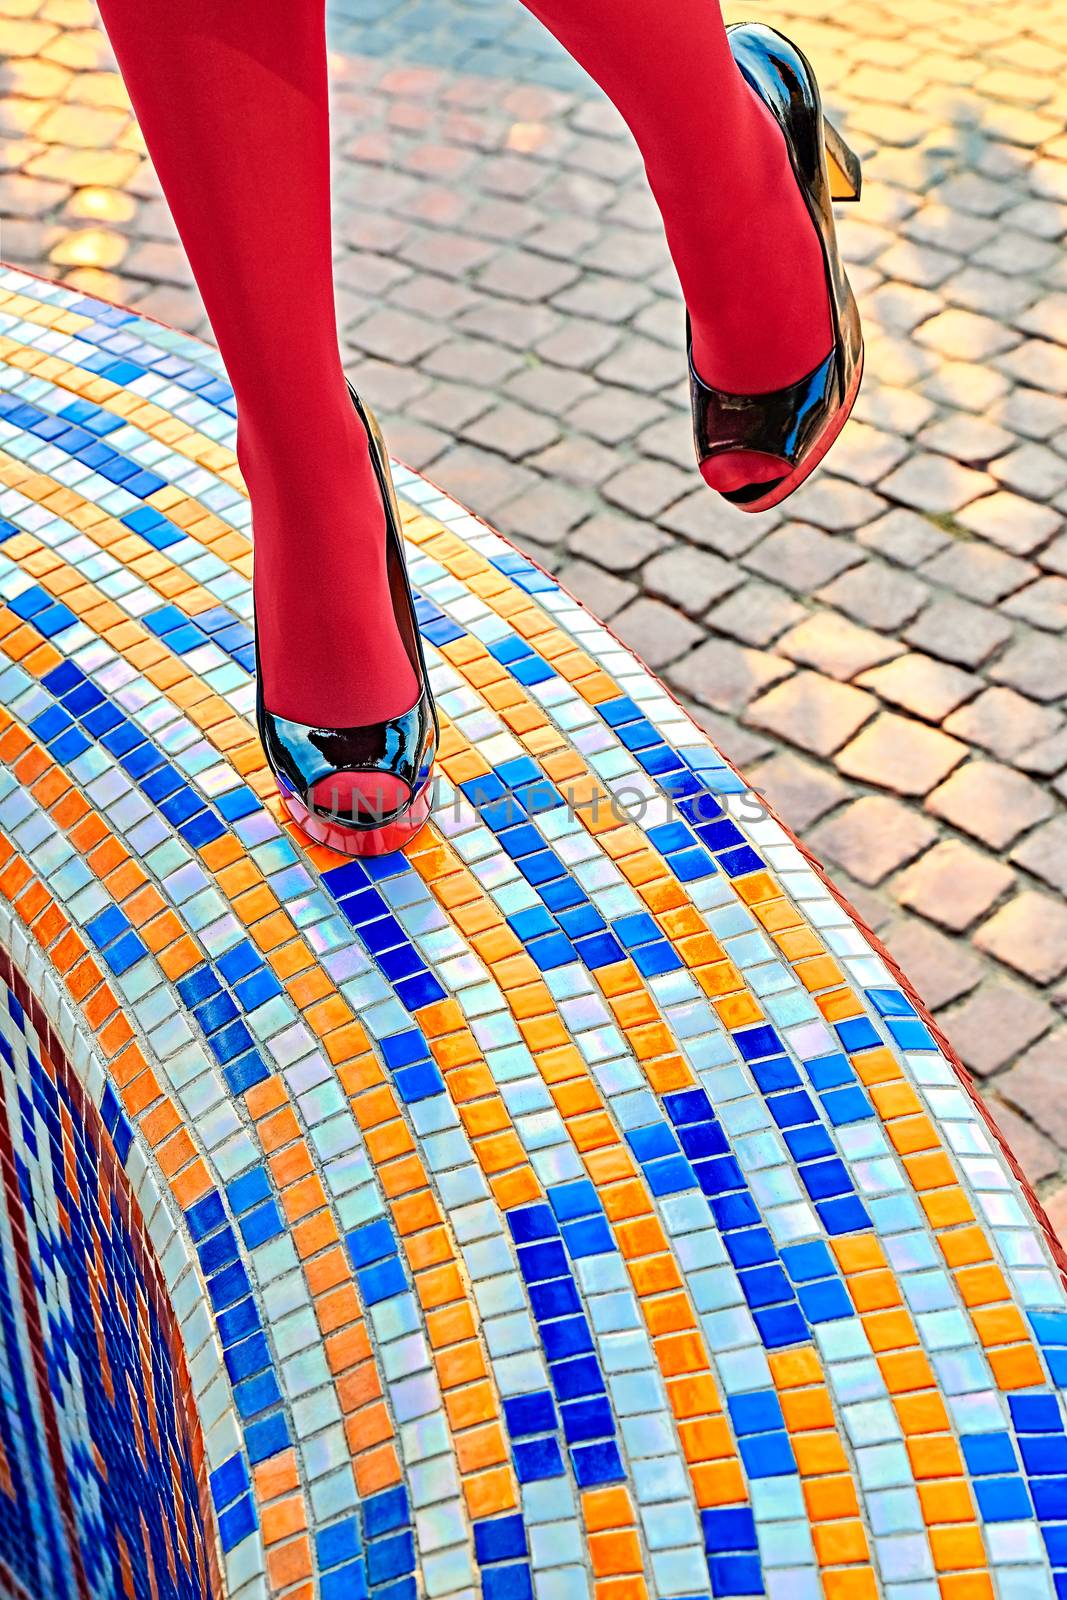 Fashion urban womens legs, pantyhose, stylish heels. Multicolored geometry square mosaic. Trendy shoes, creative, outdoor